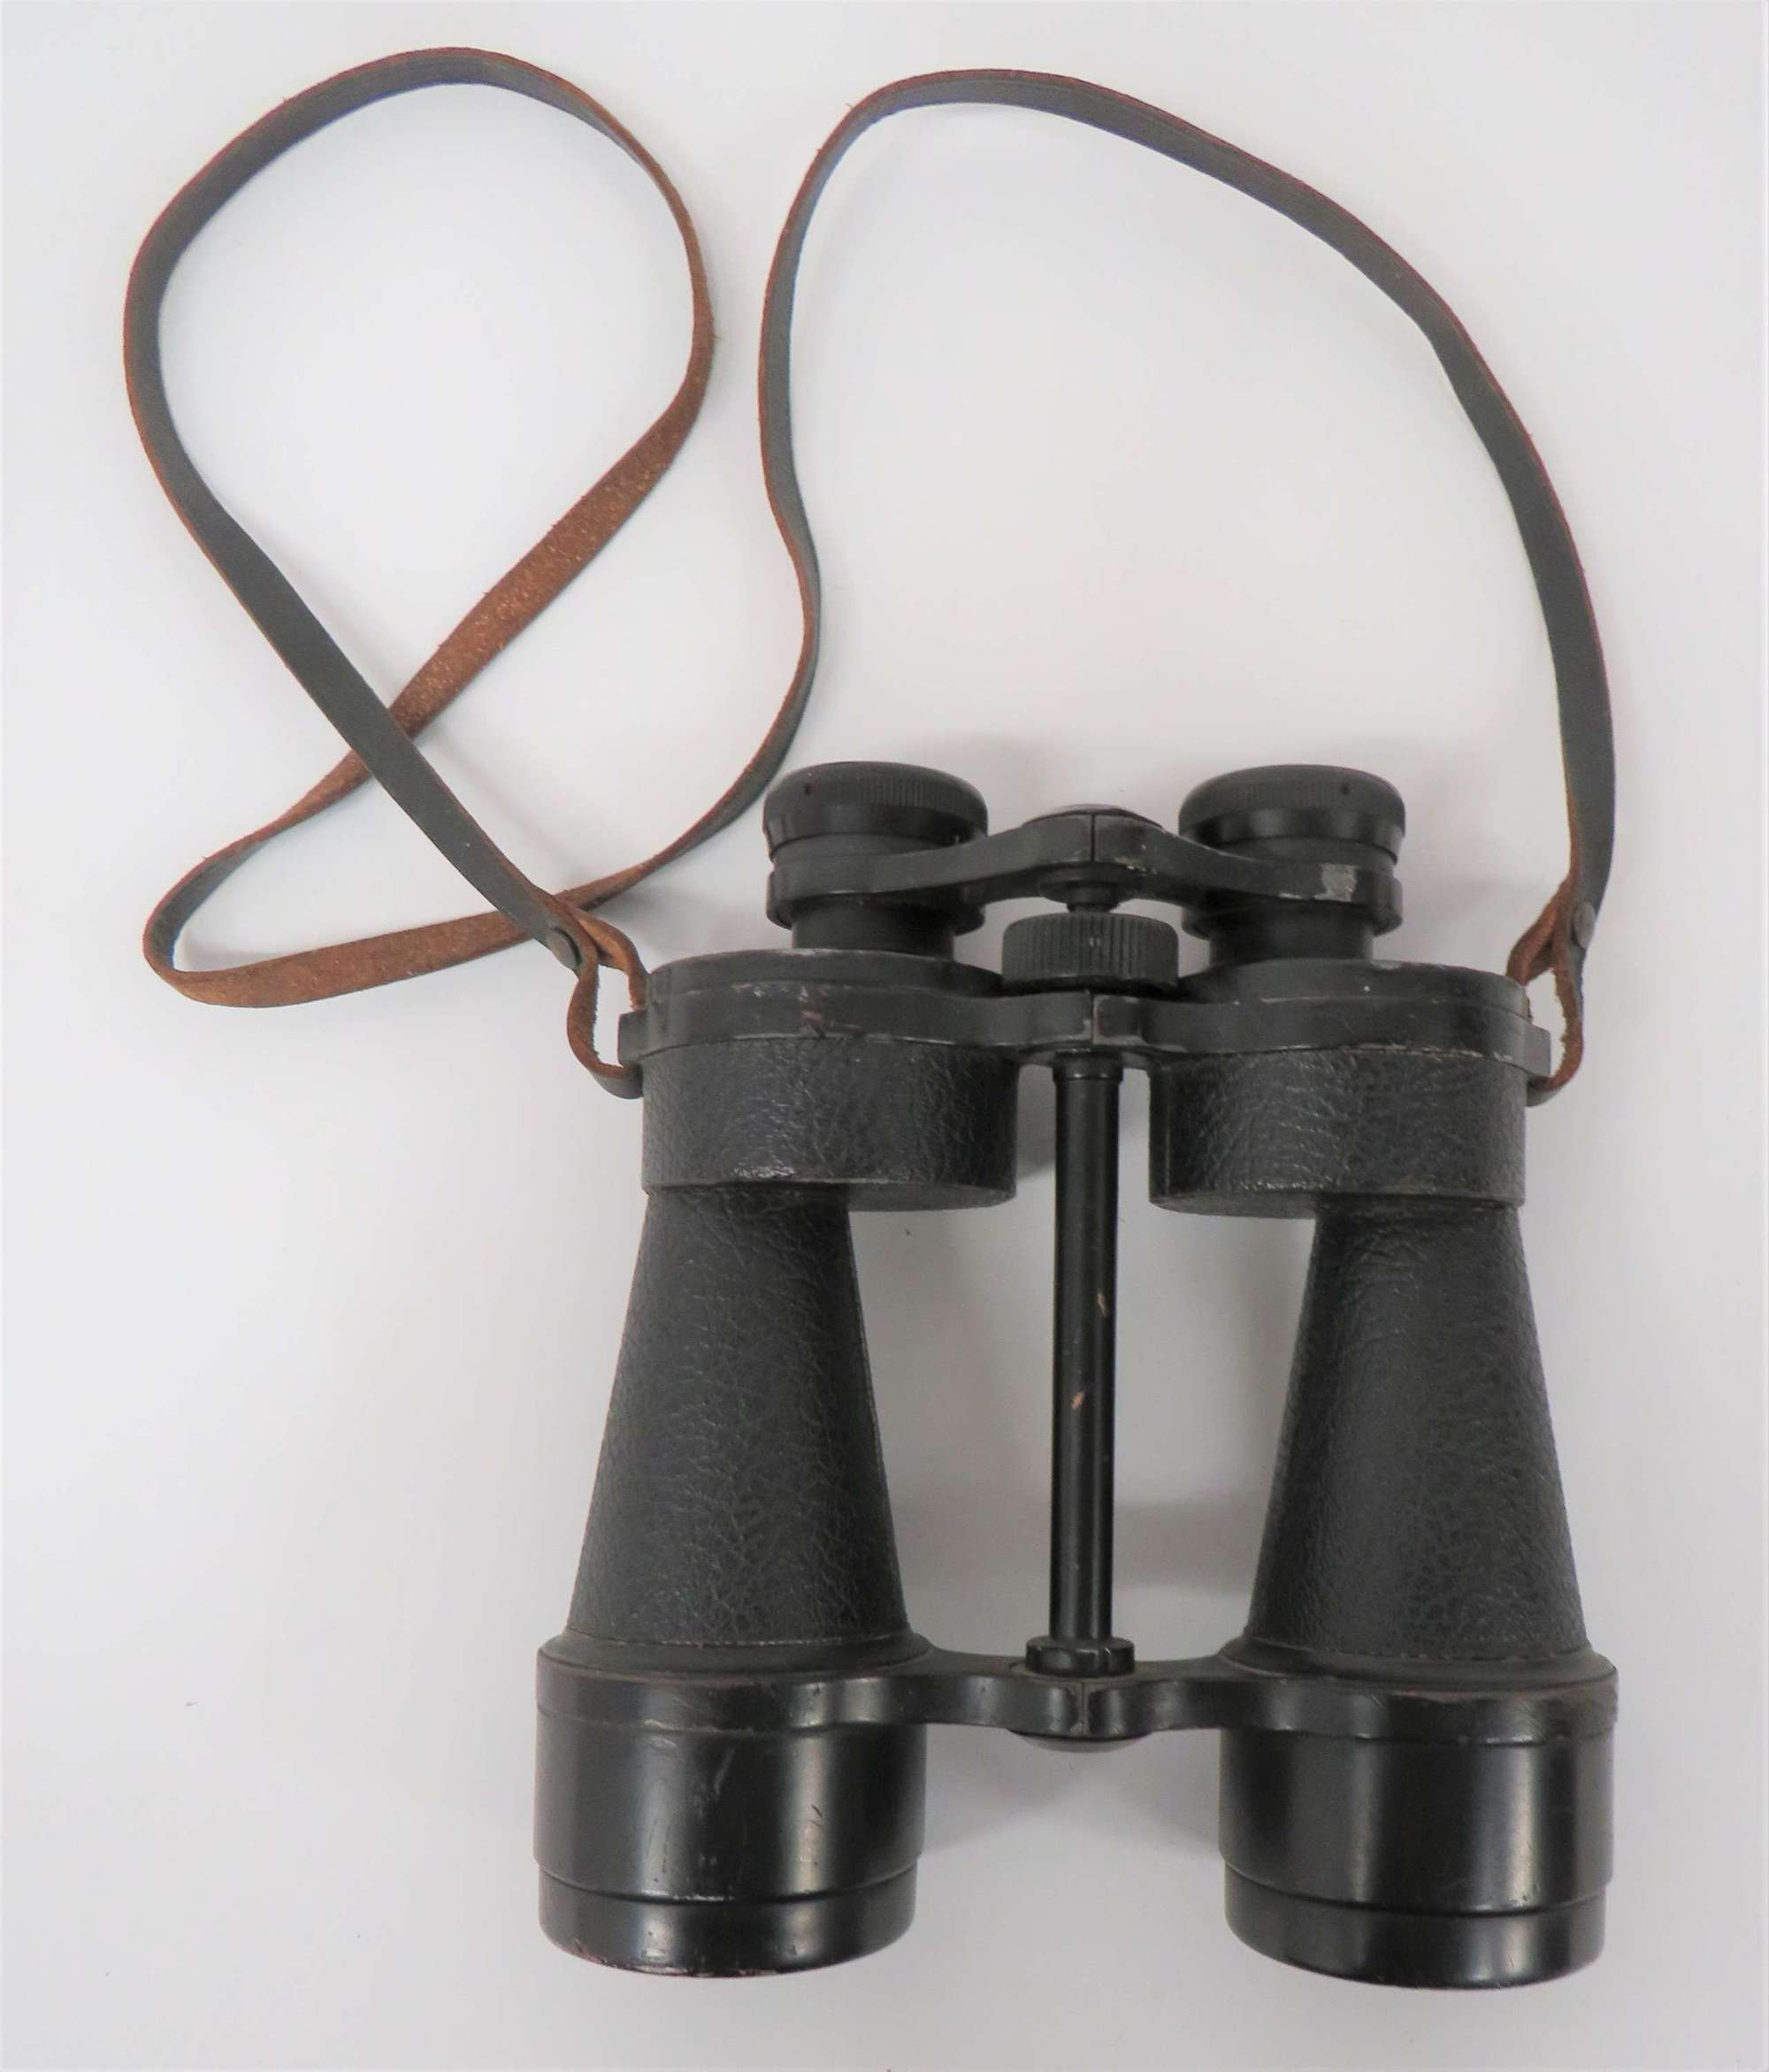 WW2 Period Binoculars by Ross